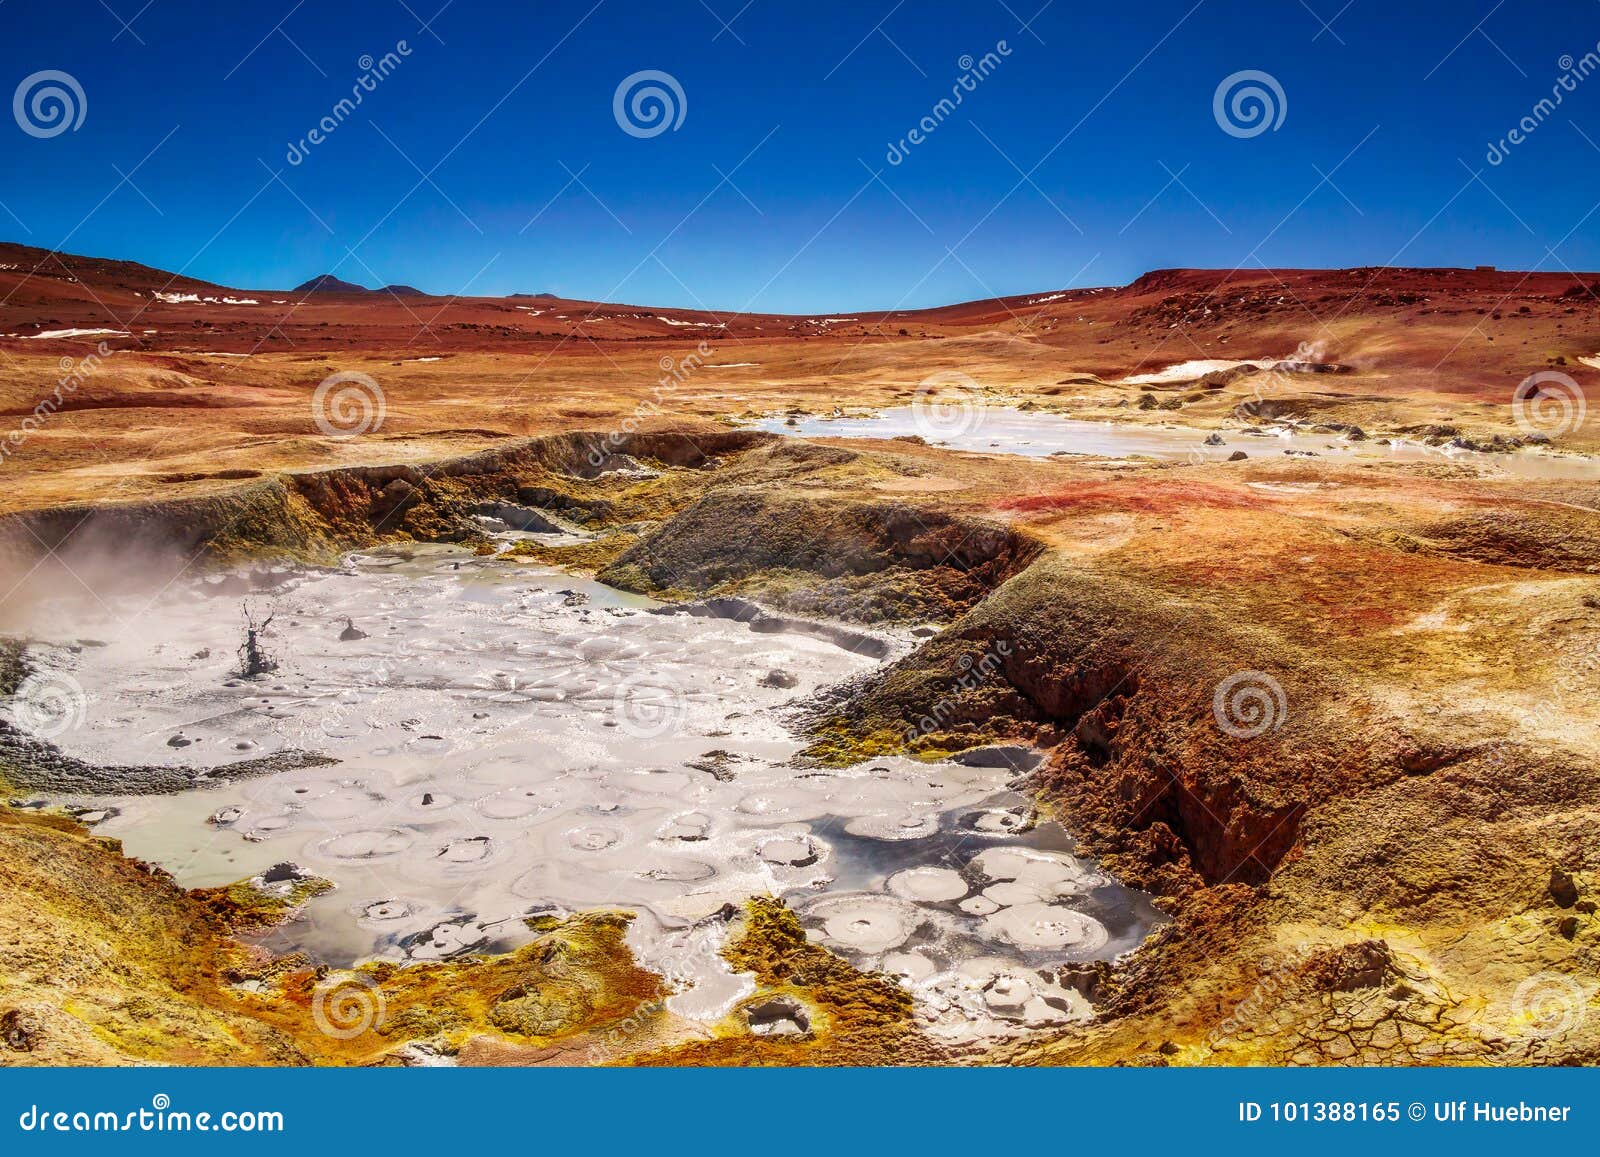 mud pool by geyser sol de la manana in the altiplano of bolivia